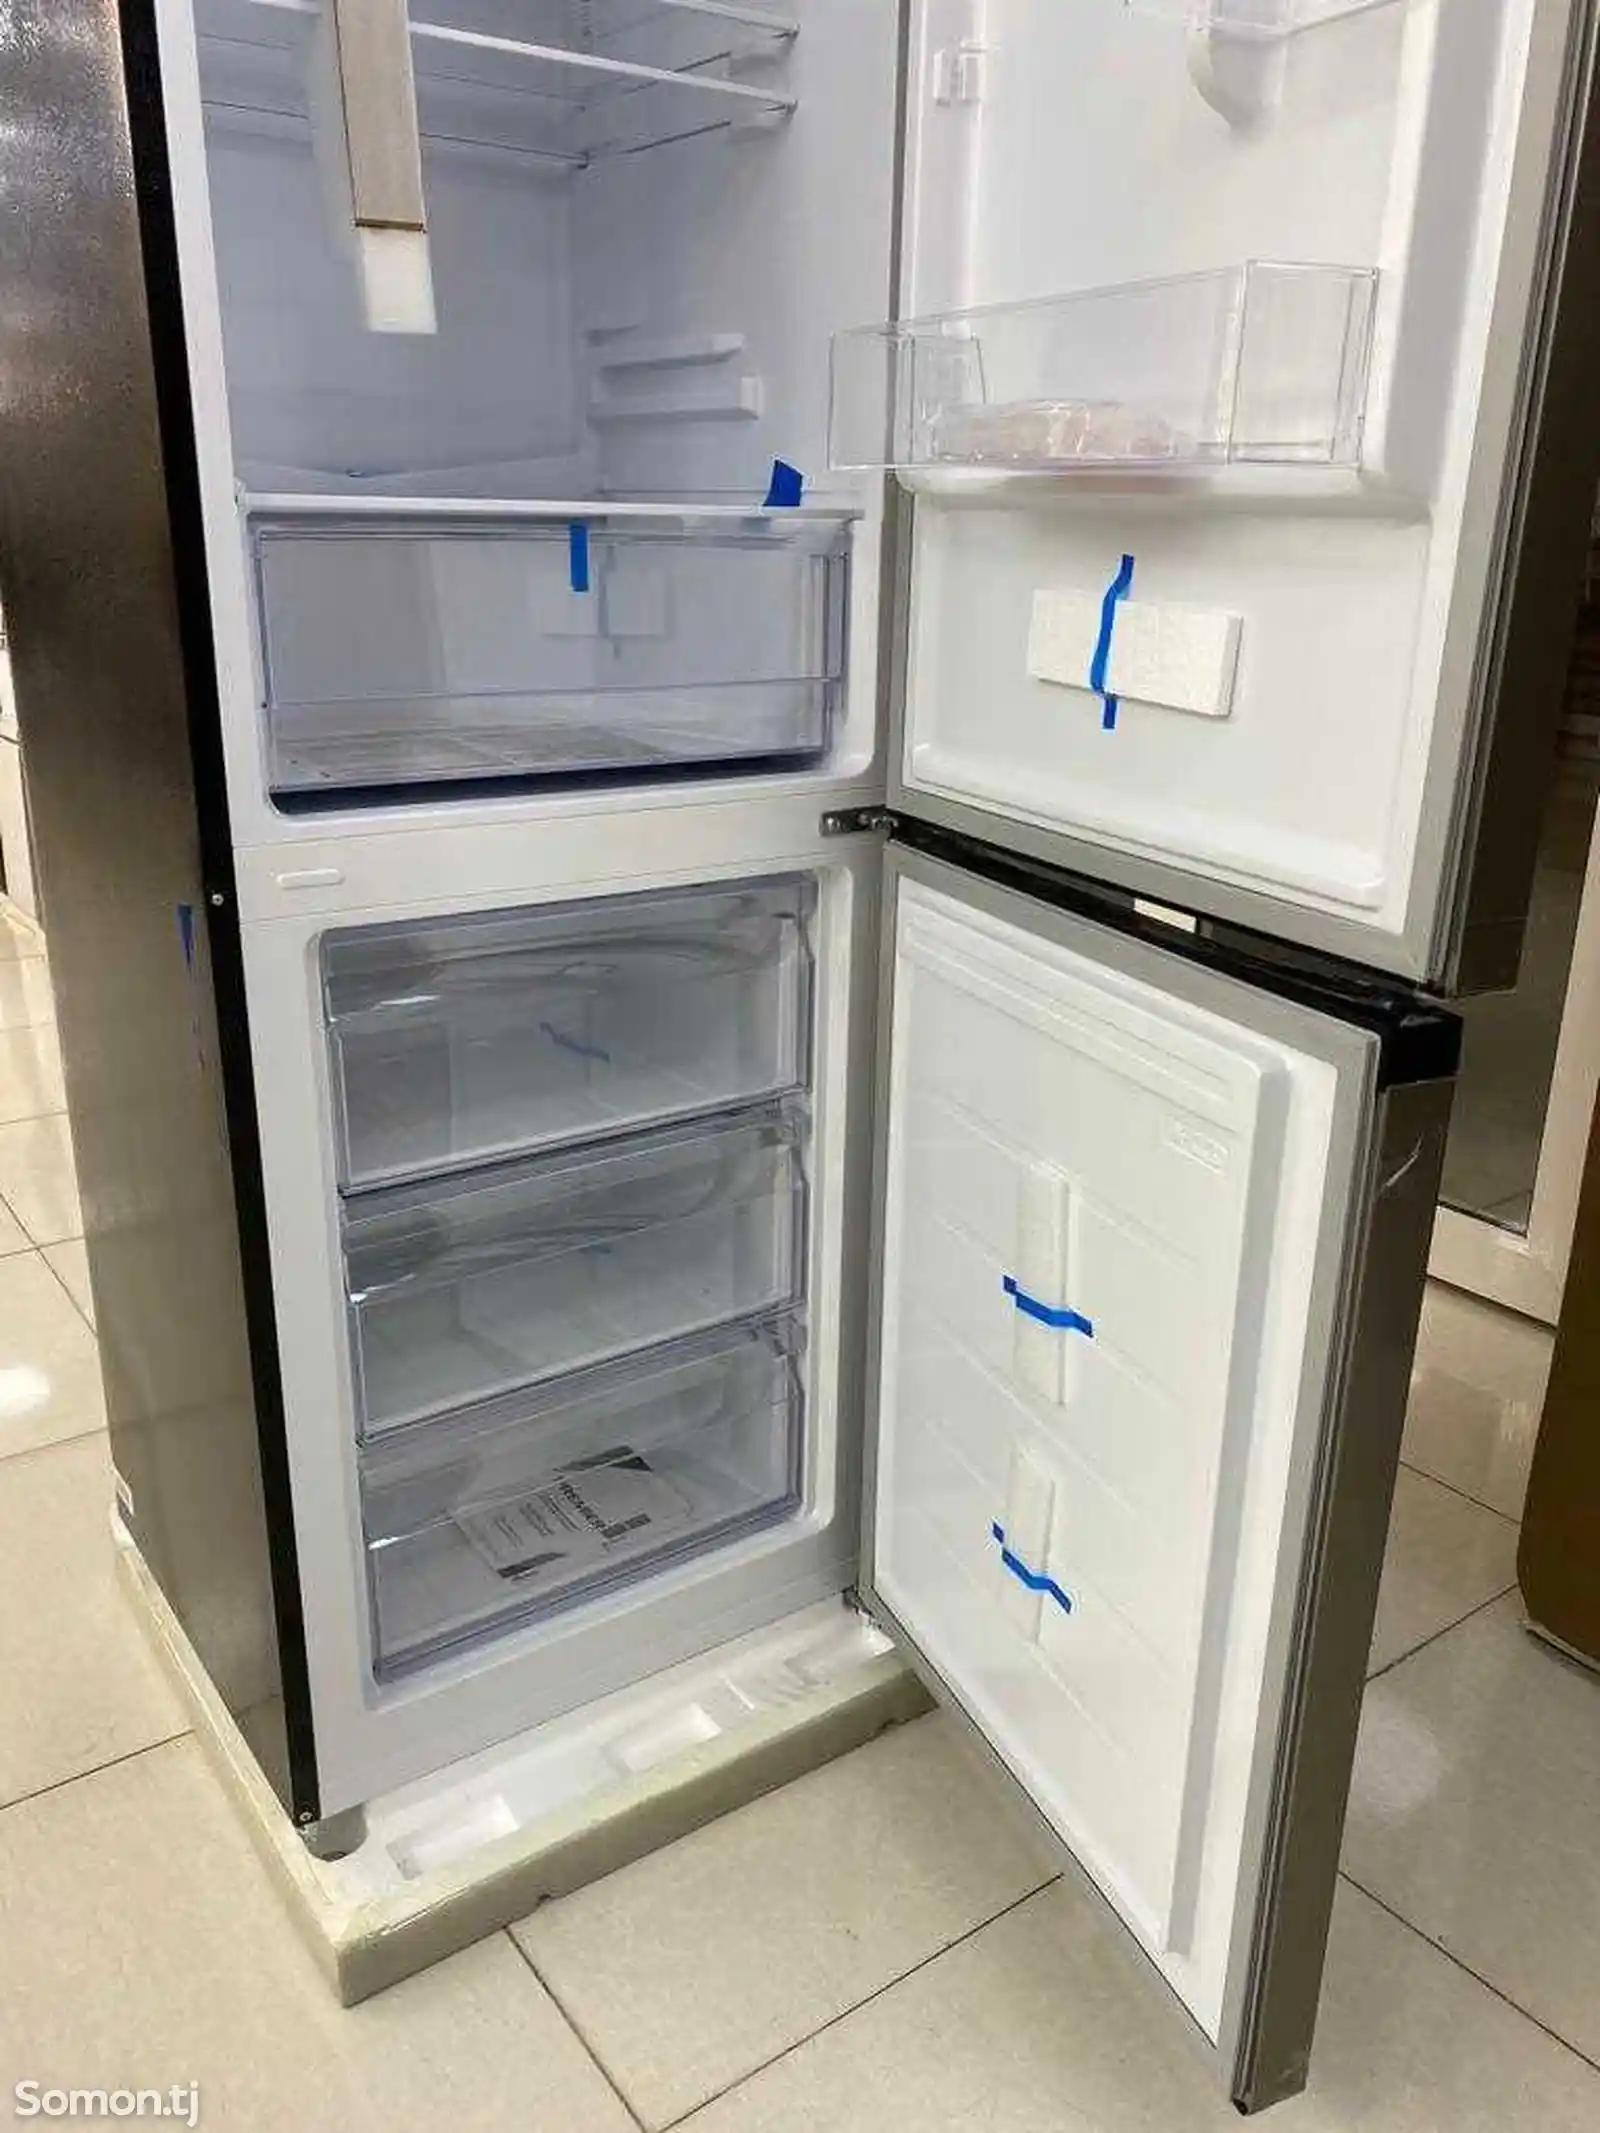 Холодильник Premier-4